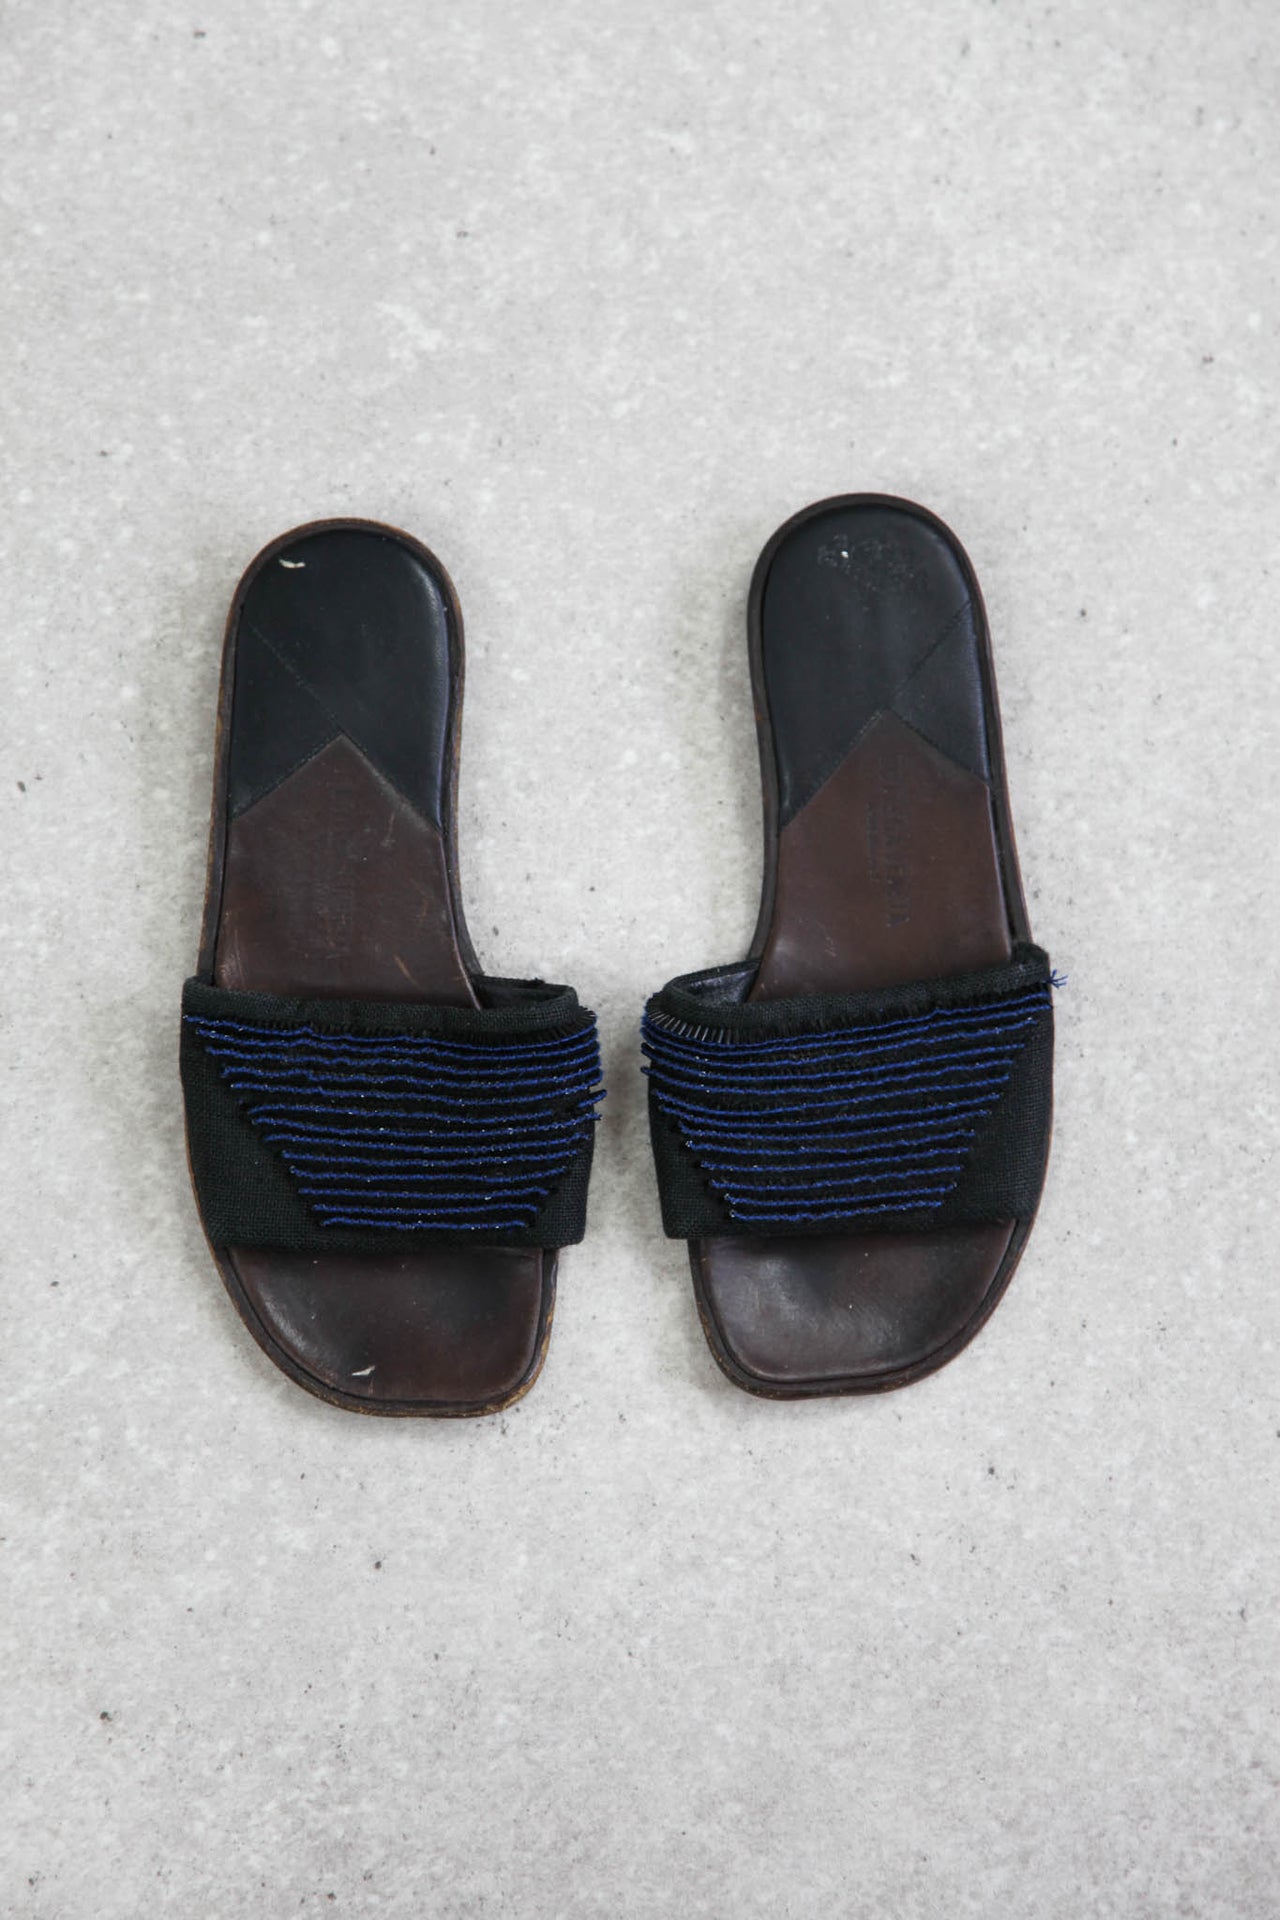 Bottega Veneta Black + Blue Sandals (EU37/ UK4/ US 6.5)